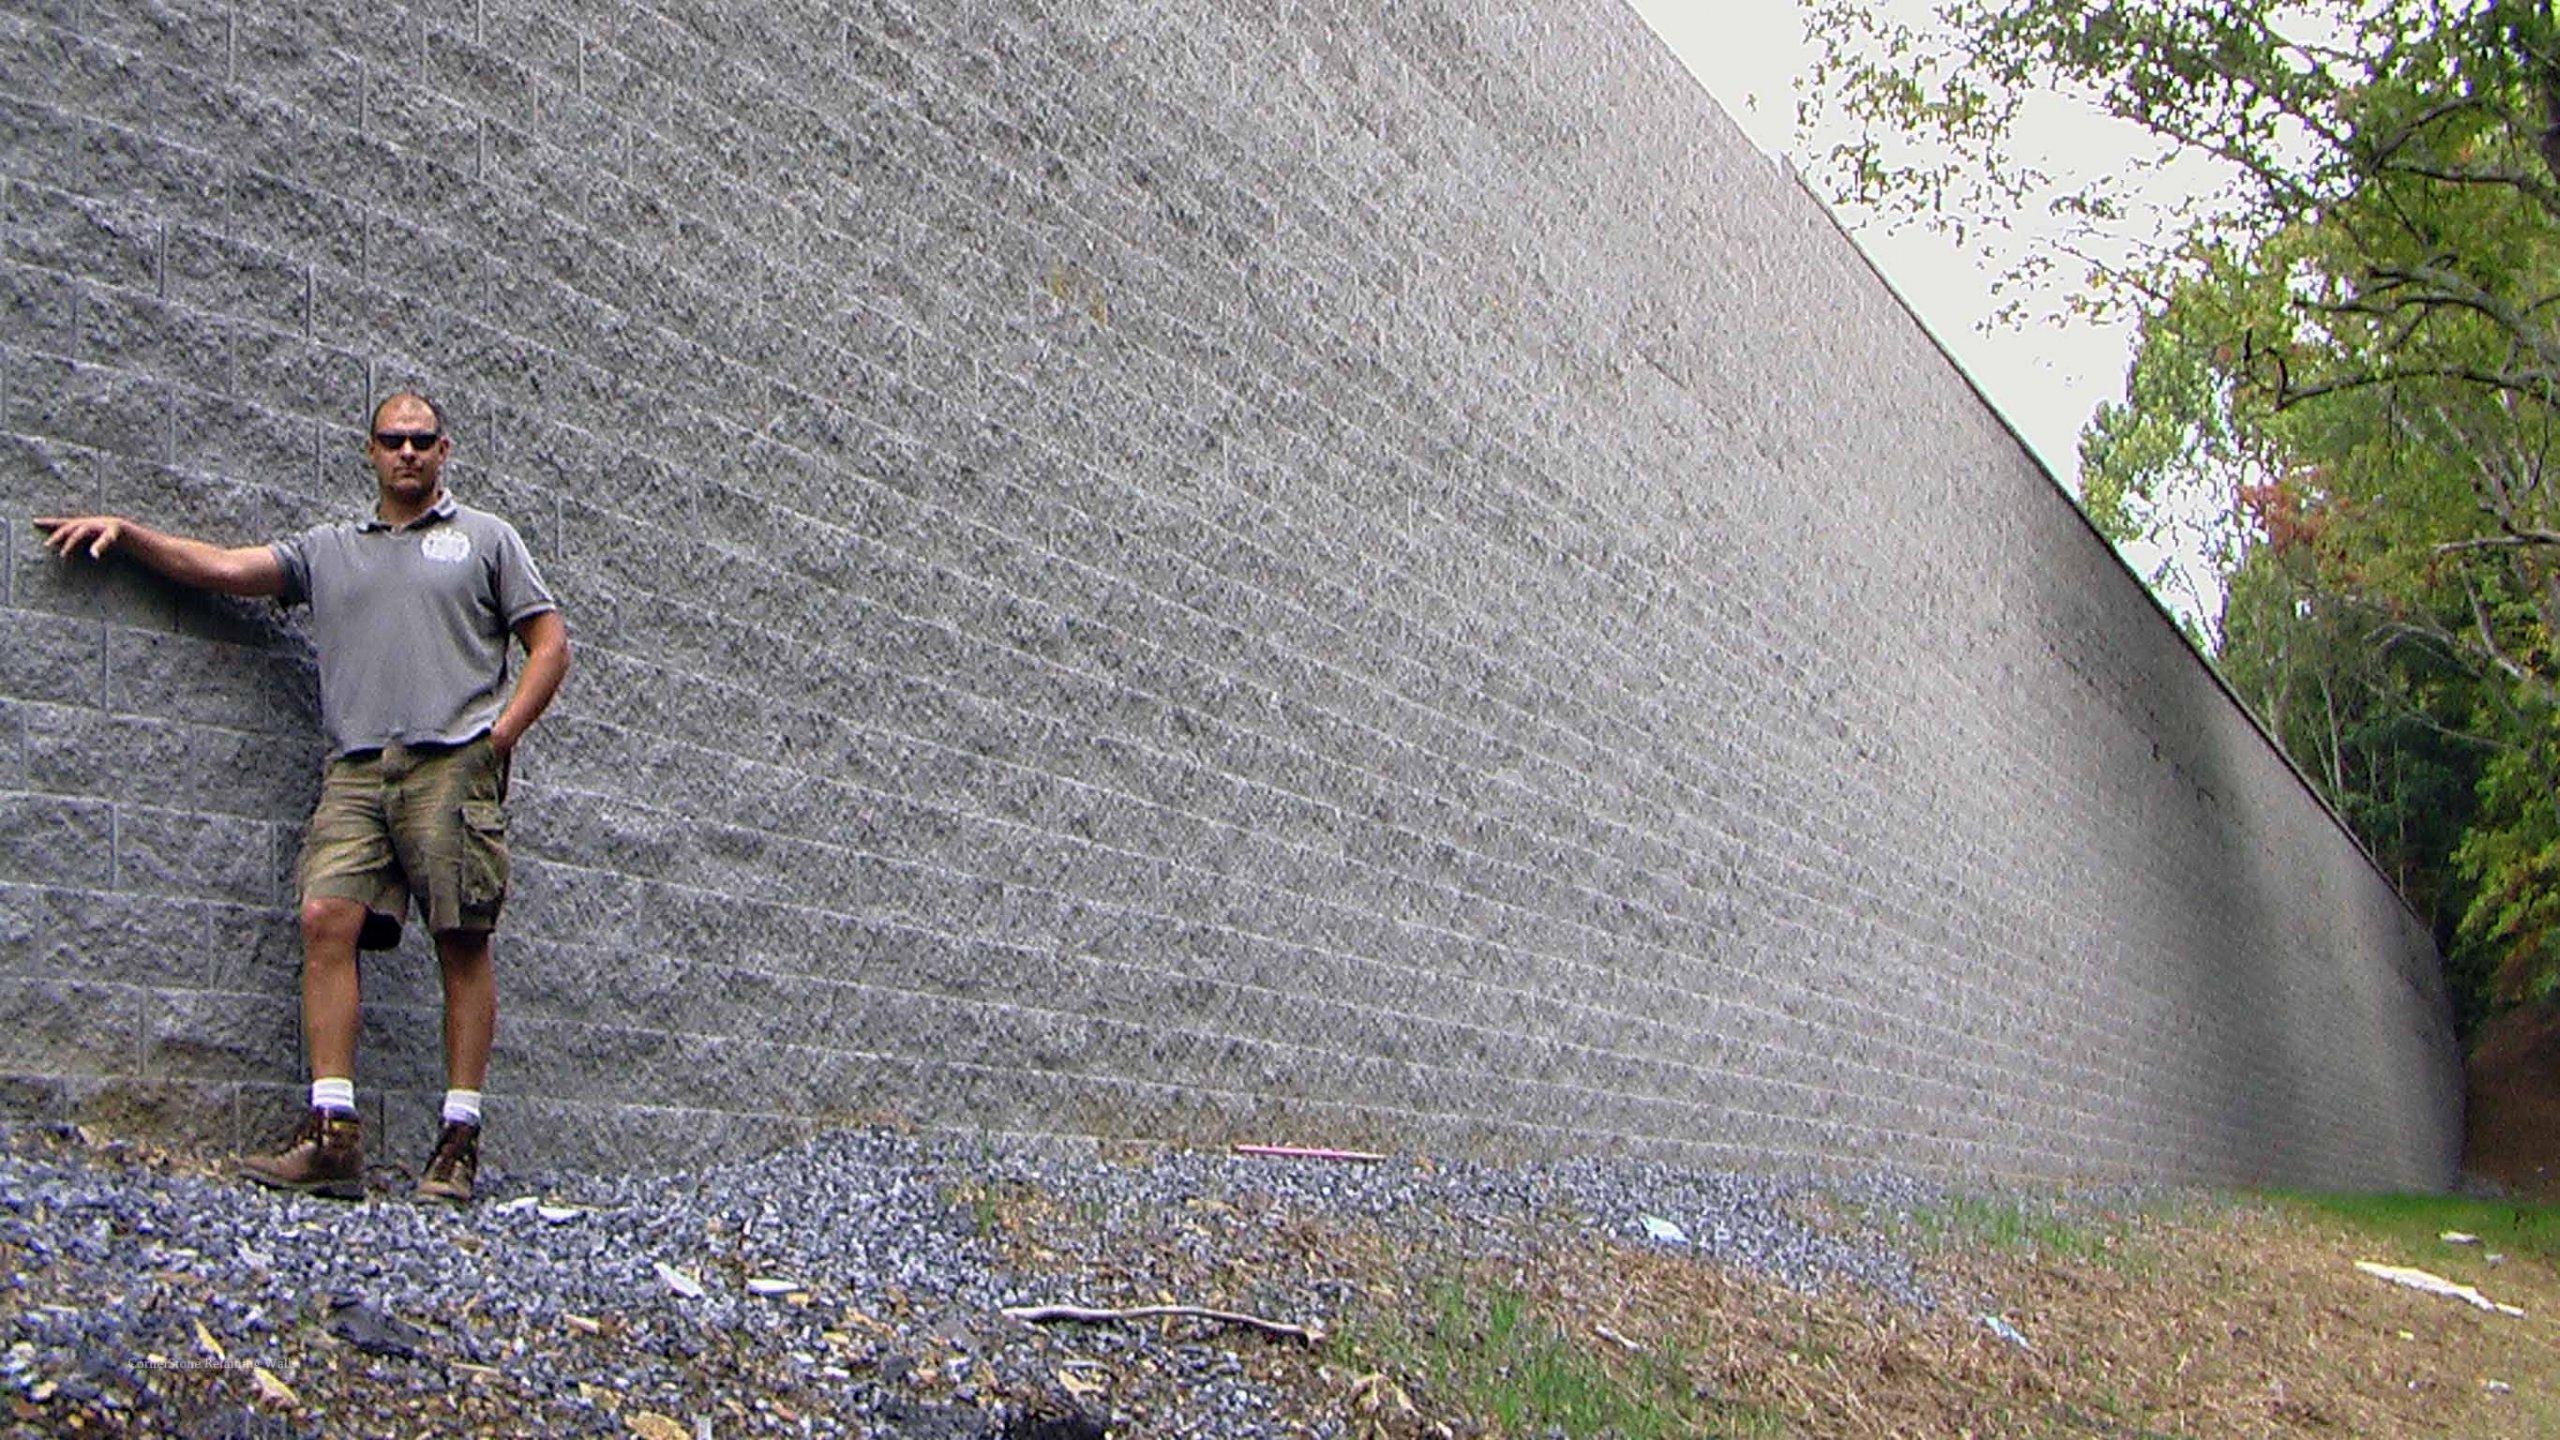 CornerStone 100 Tall Retaining Wall at Fun Depot in North Carolina